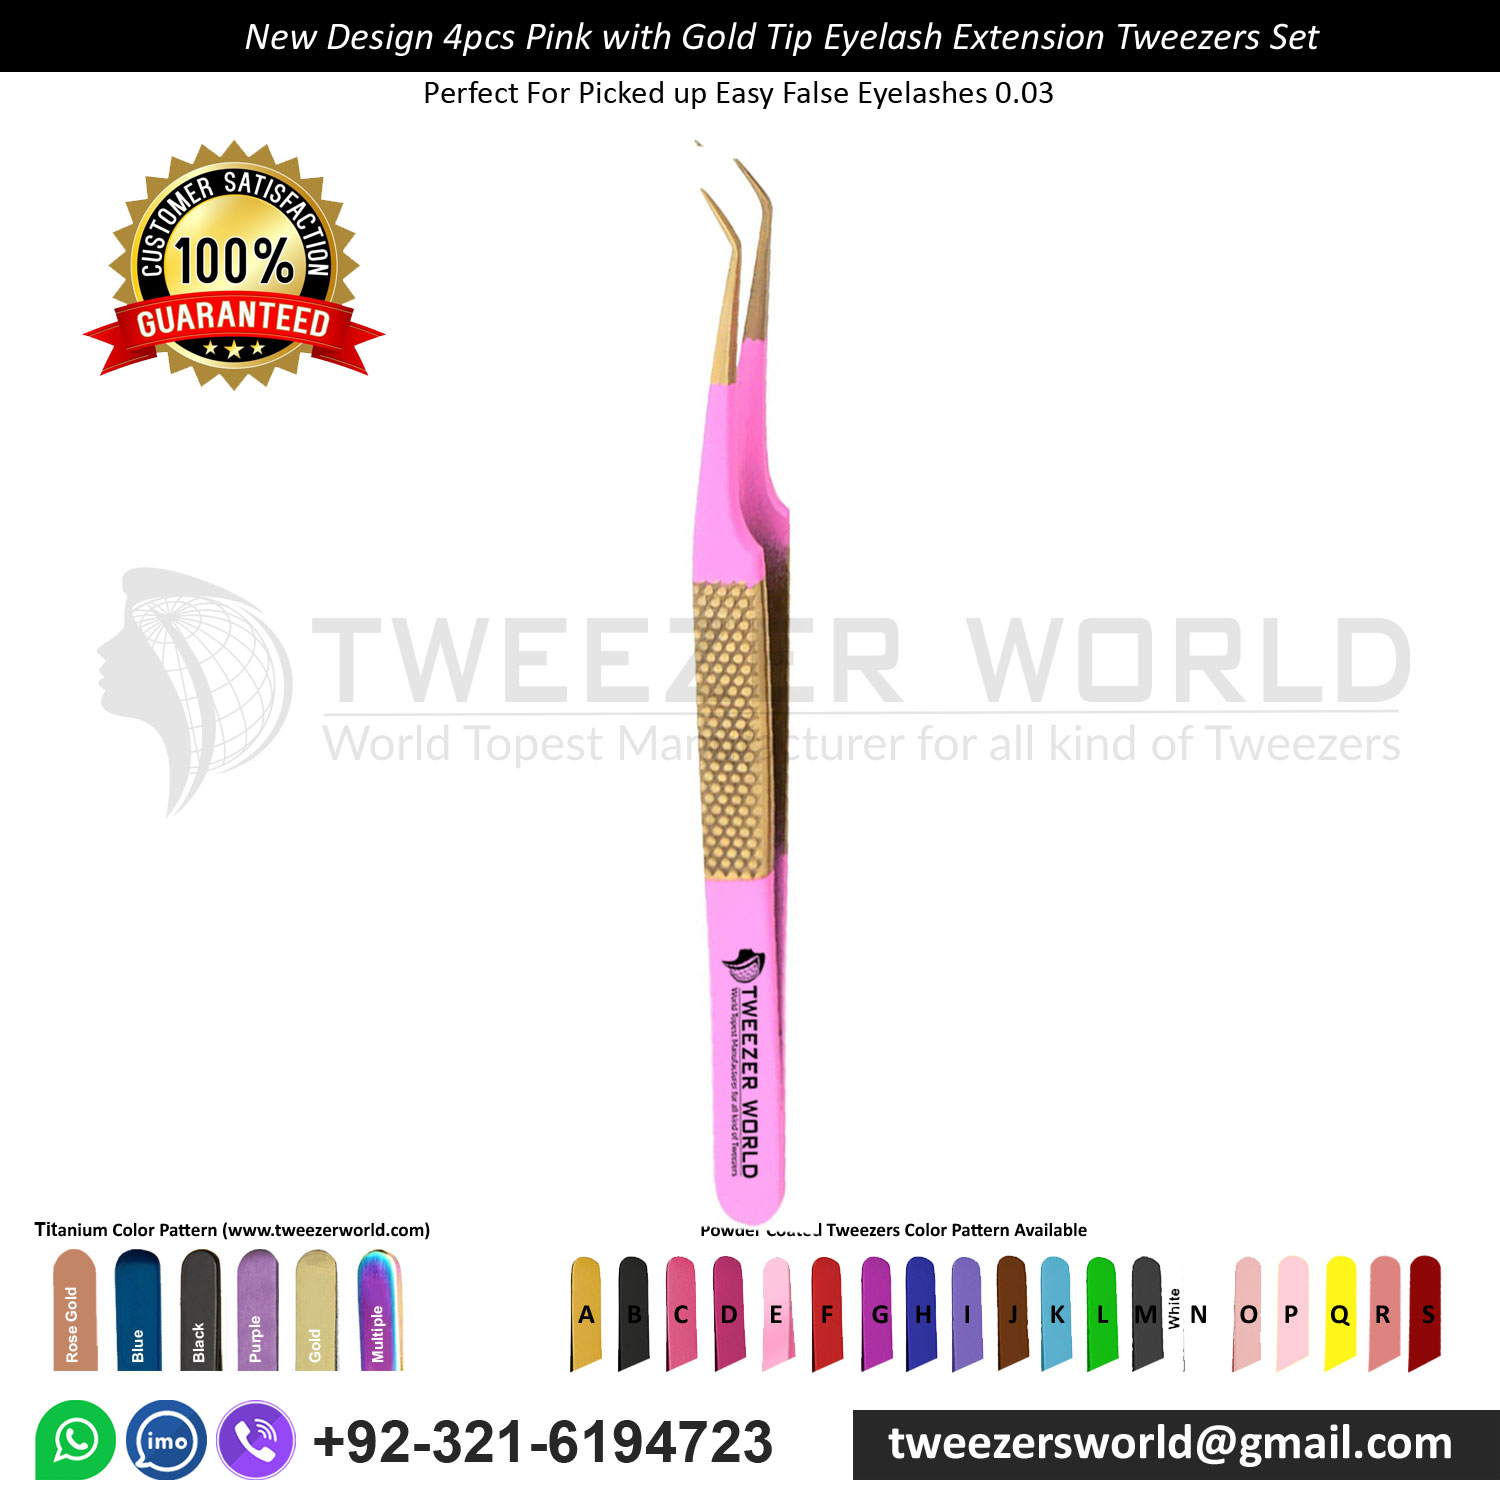 New Design 4pcs Pink with Gold Tip Eyelash Tweezers Sets